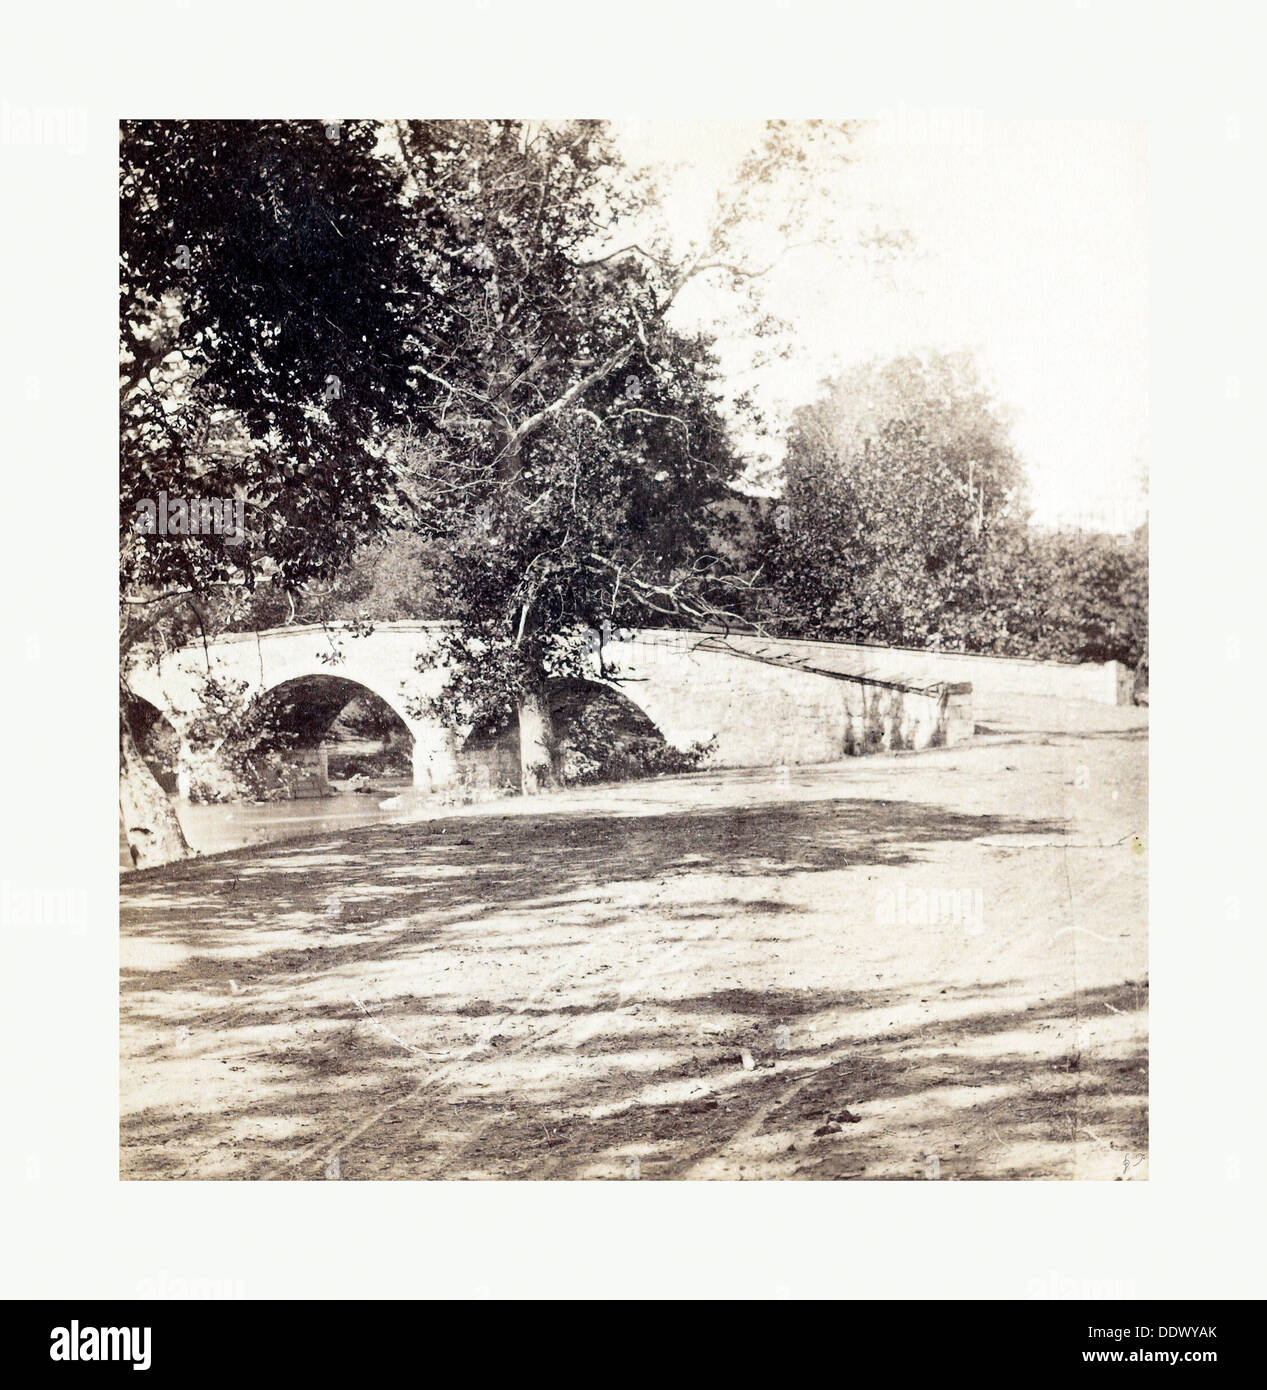 La guerra civile americana: Burnside Bridge, Antietam, sett, 1862, vista parziale di un ponte di pietra sul torrente Antietam in Maryland Foto Stock